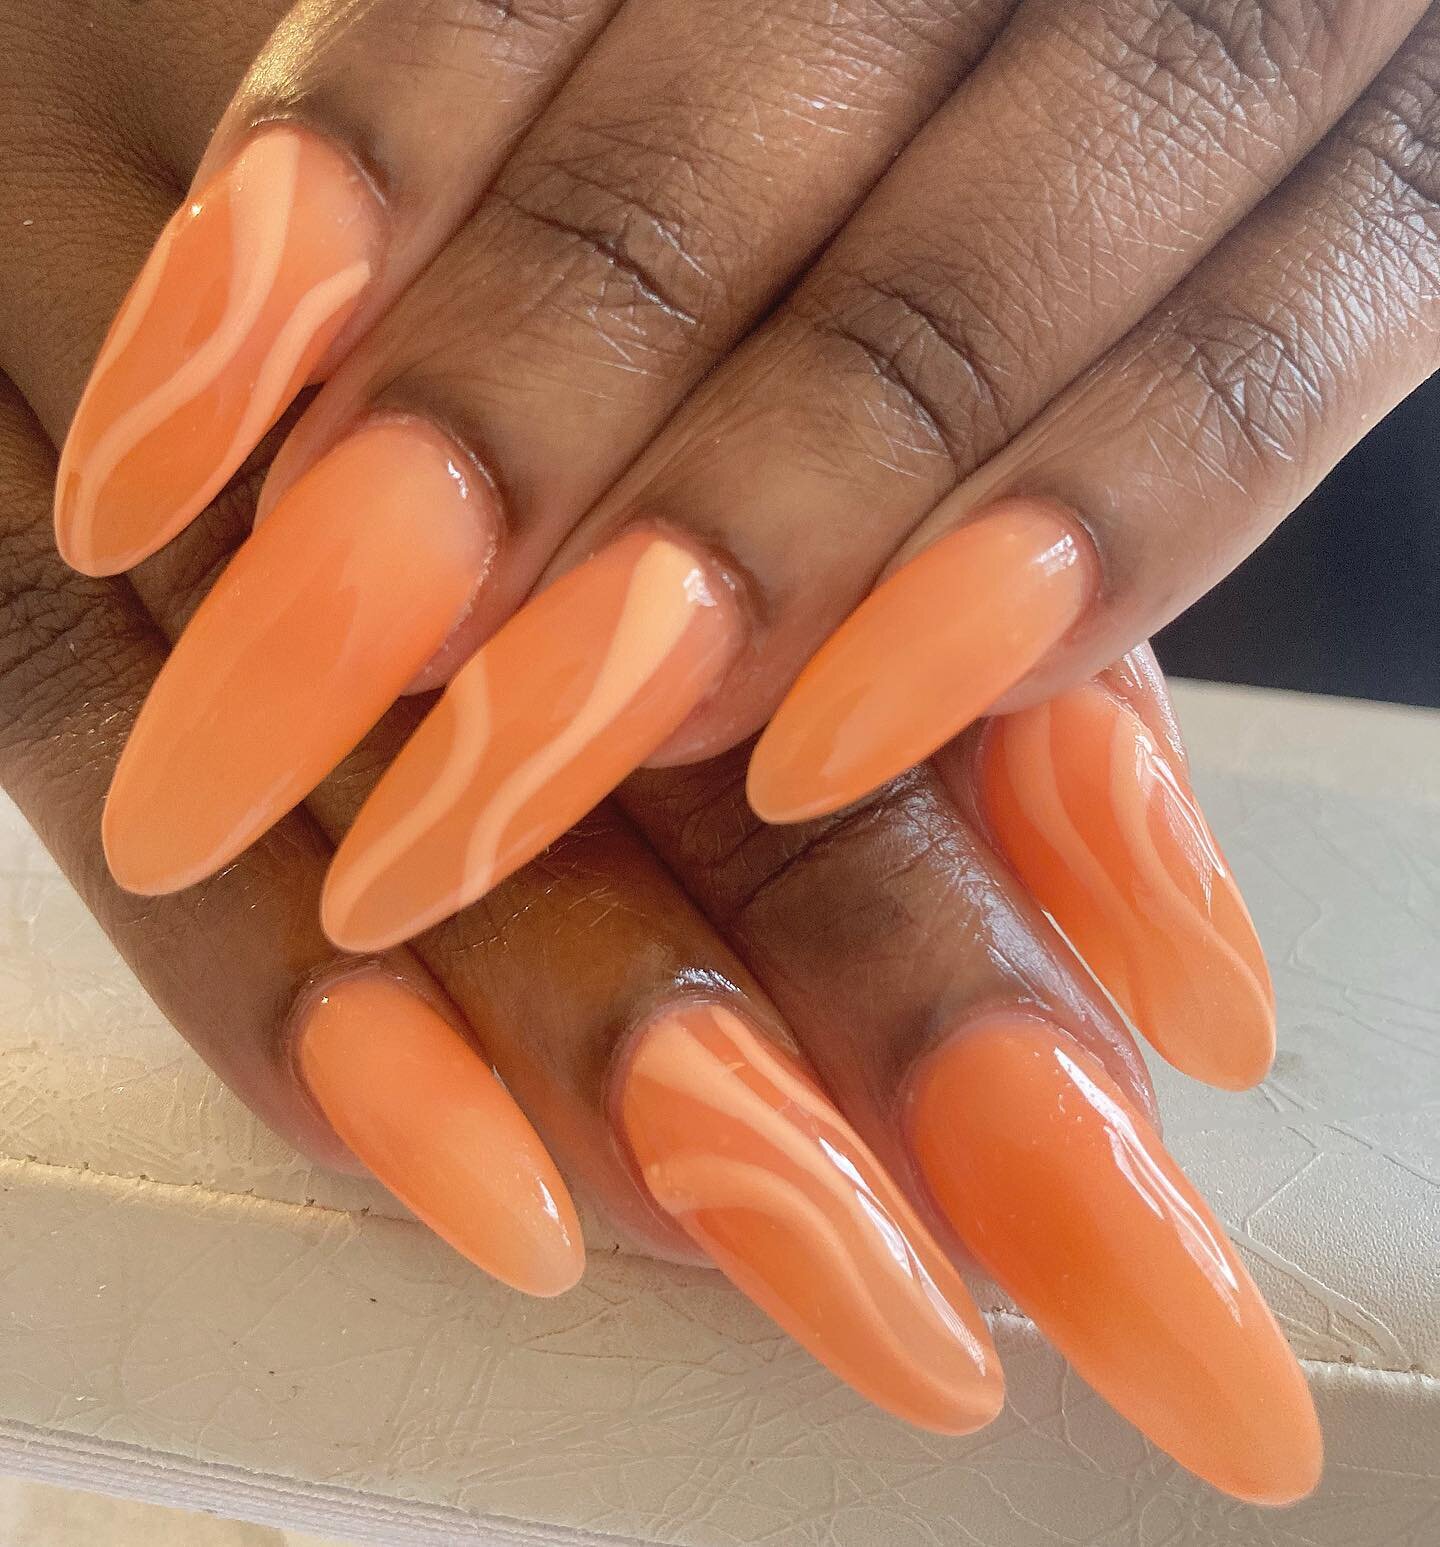 Orange creamsicle. 🧡🍊

#polygelnails #nailsnailsnails #ovalnails #nailsdesign #nailart #nailartist #blacknailtech #nailstyle #nailstylist #nycnailtech